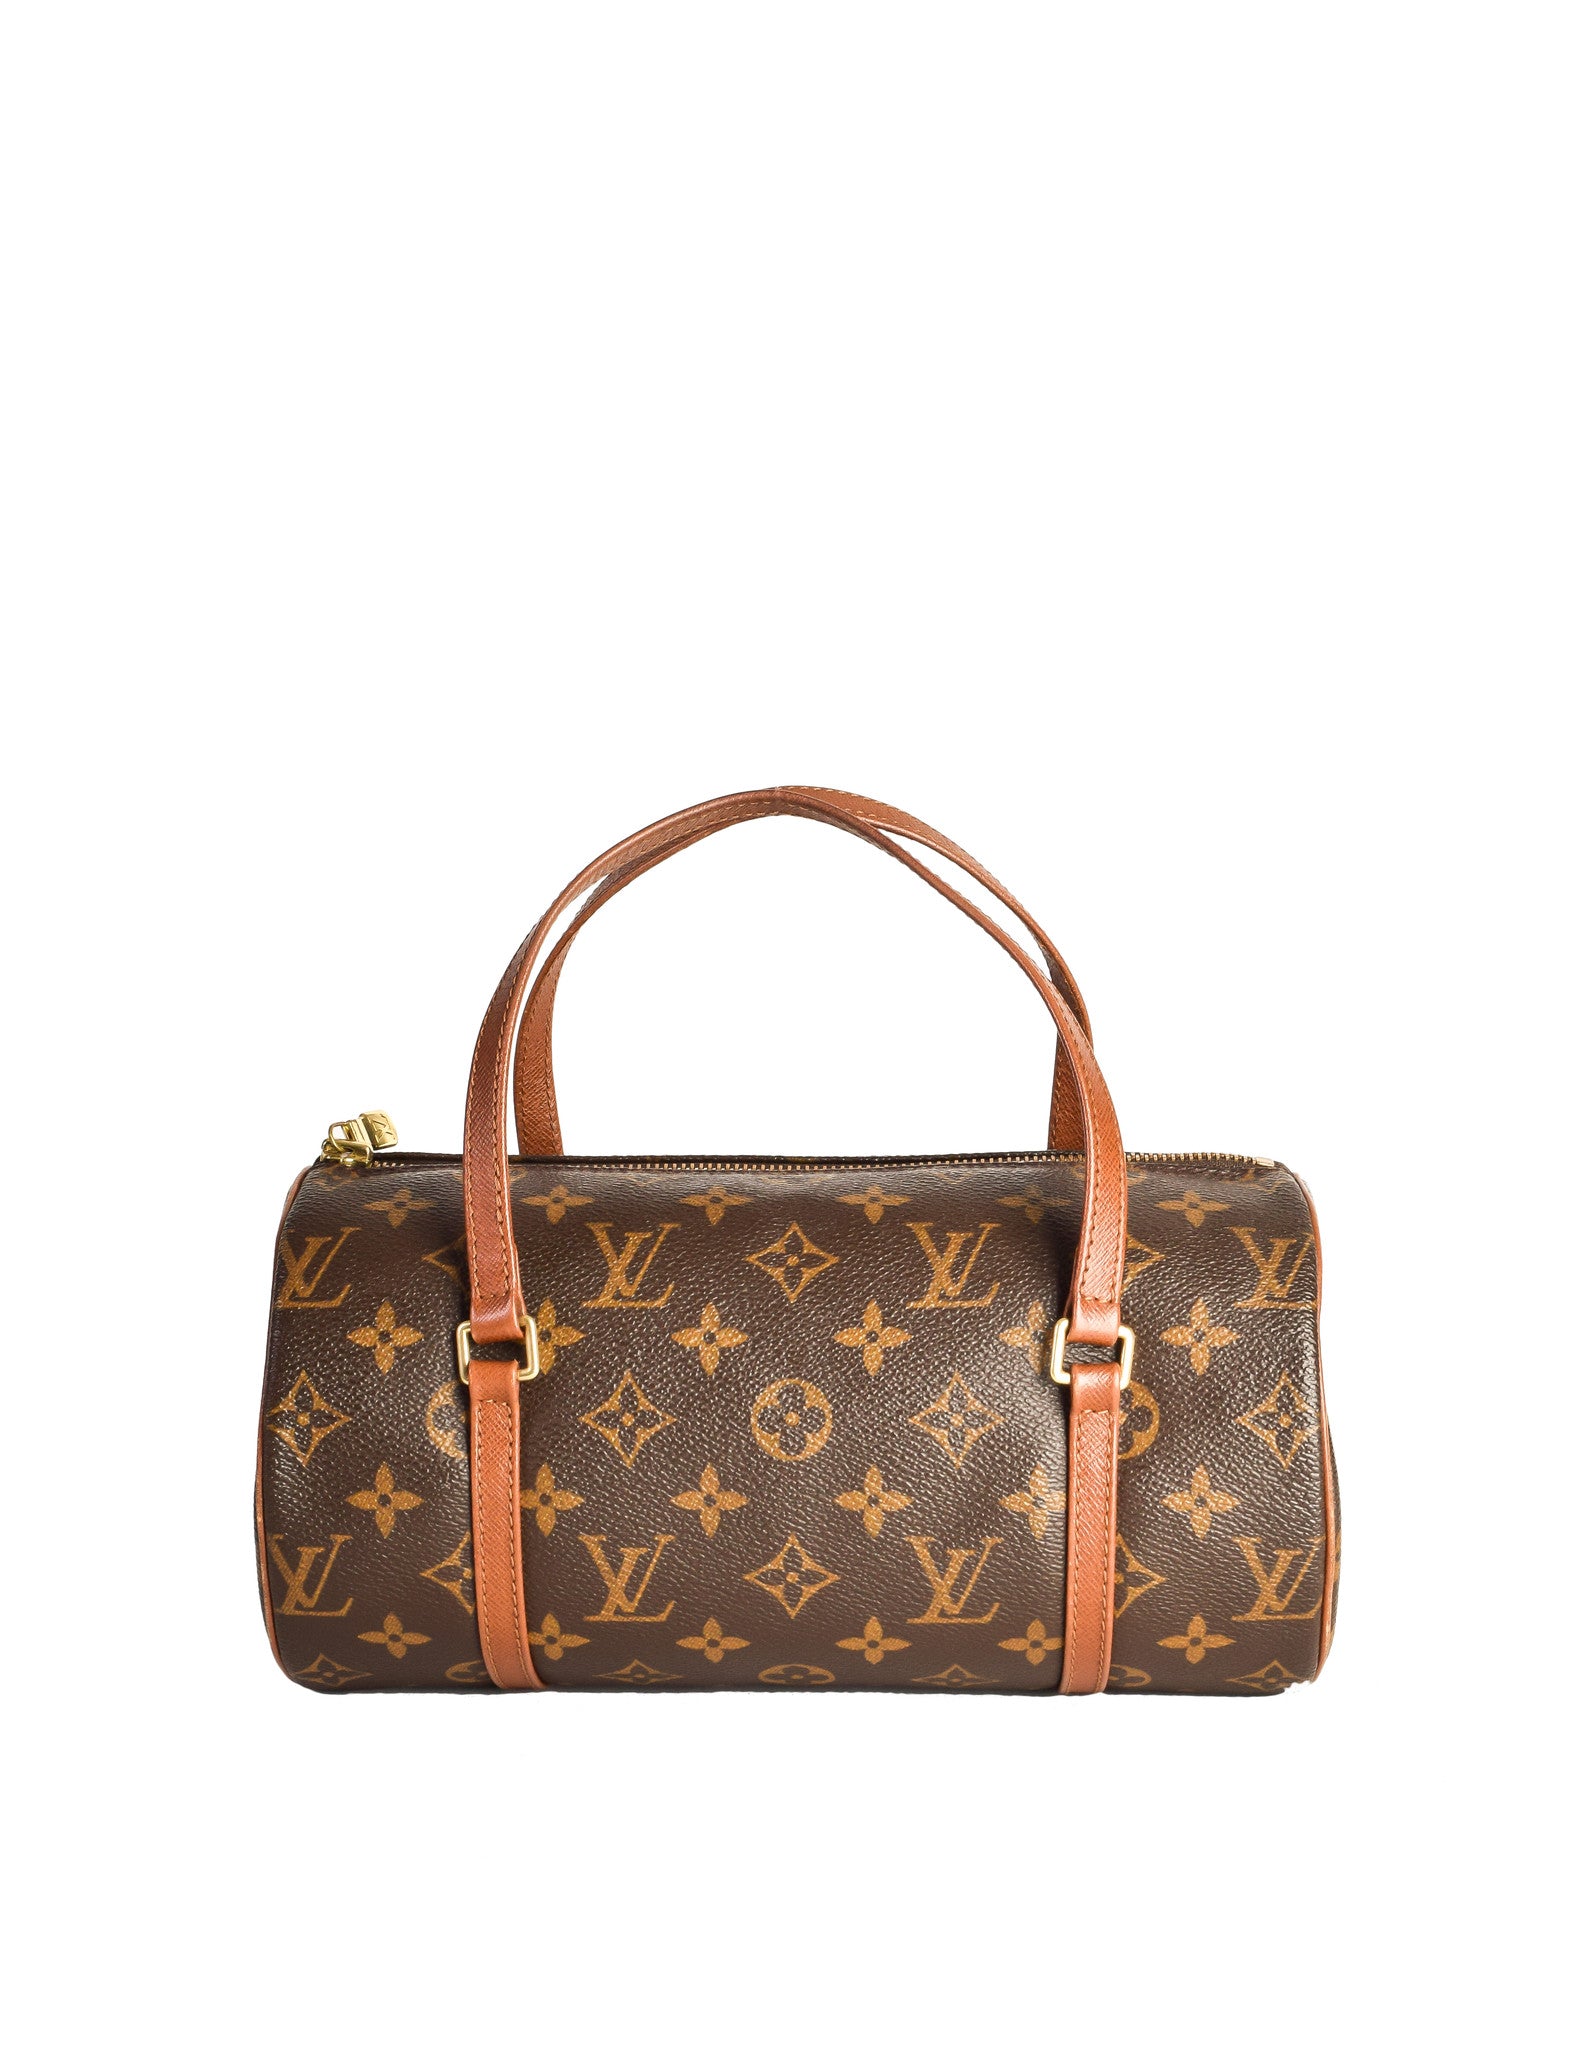 Old Style Louis Vuitton Handbags | SEMA Data Co-op